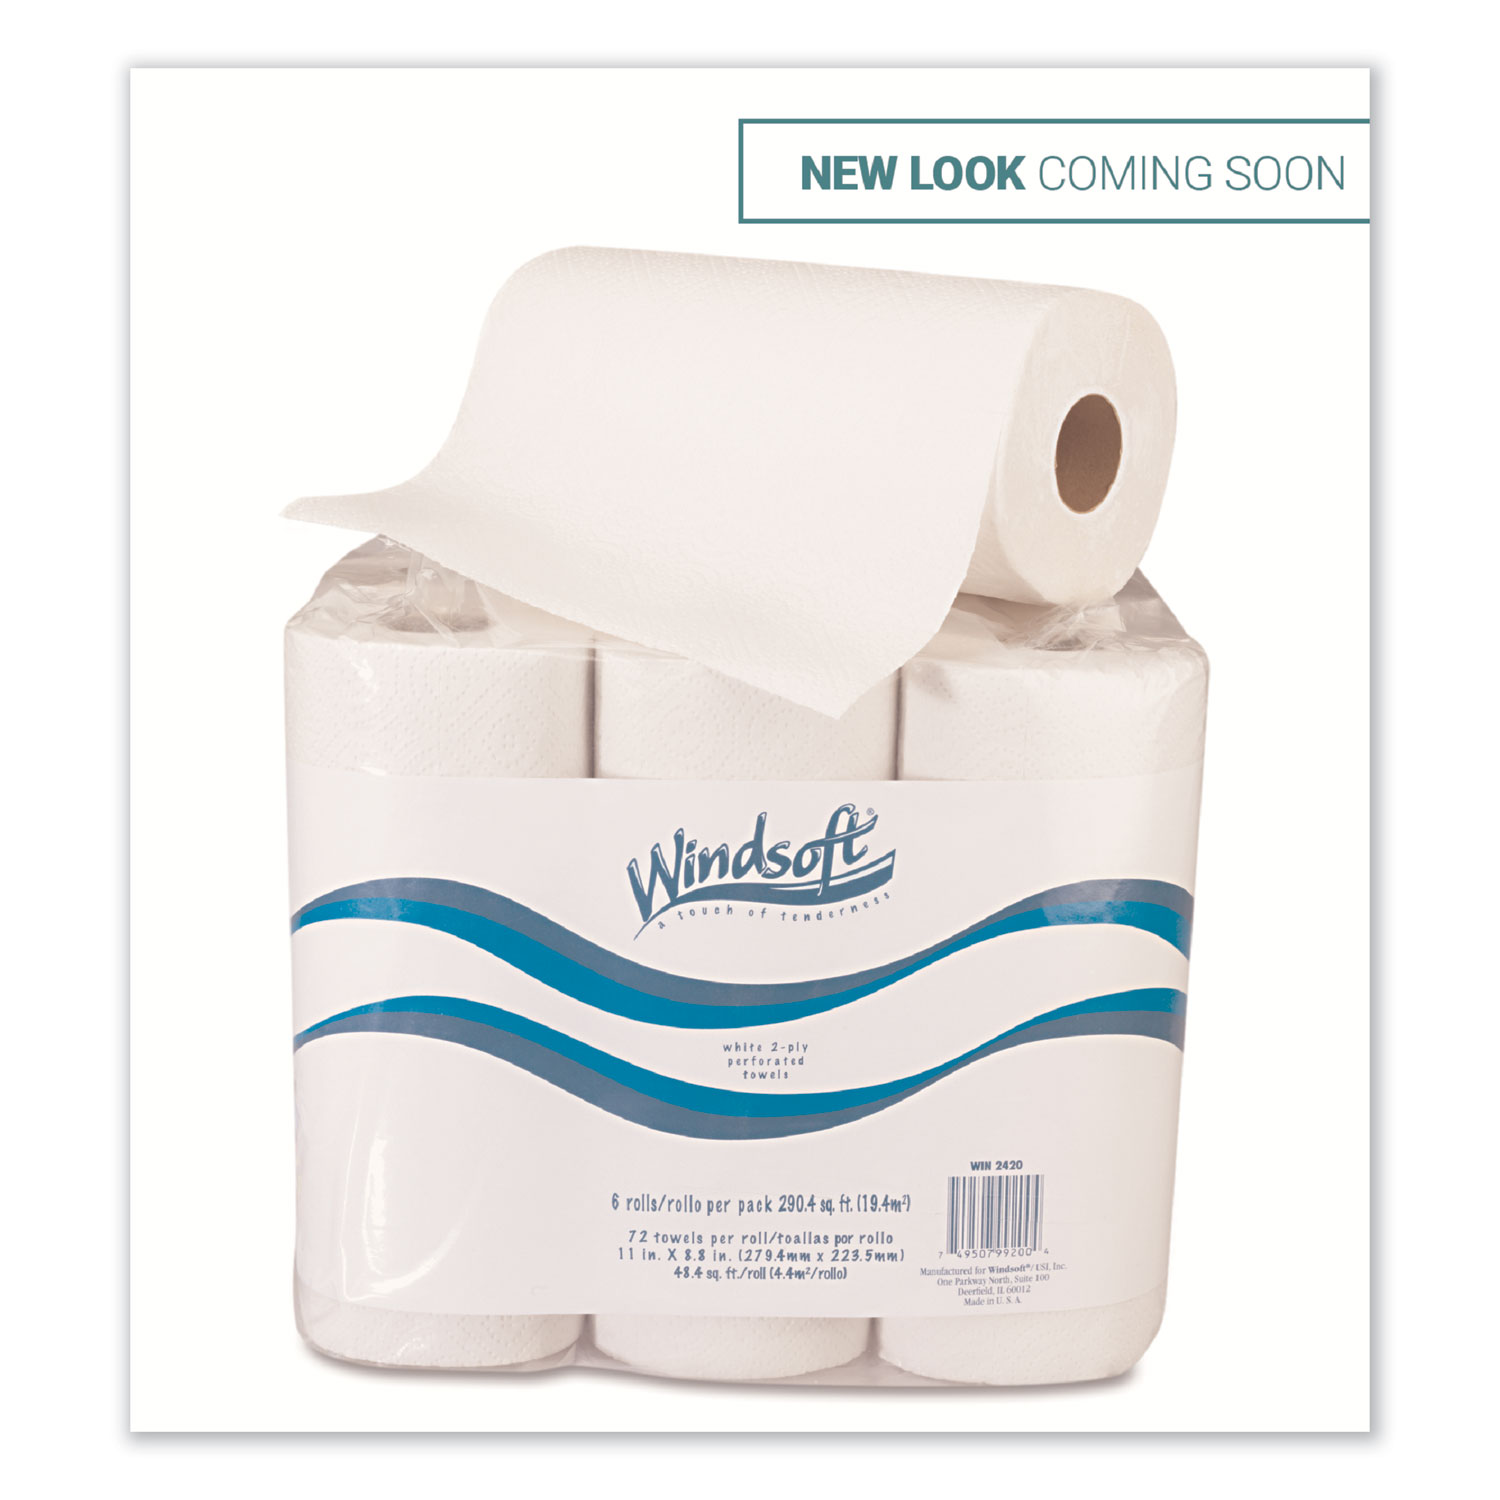  Windsoft WIN2420 Kitchen Roll Towels, 2 Ply, 11 x 9, White, 72/Roll, 6 Rolls/Pack (WIN2420) 